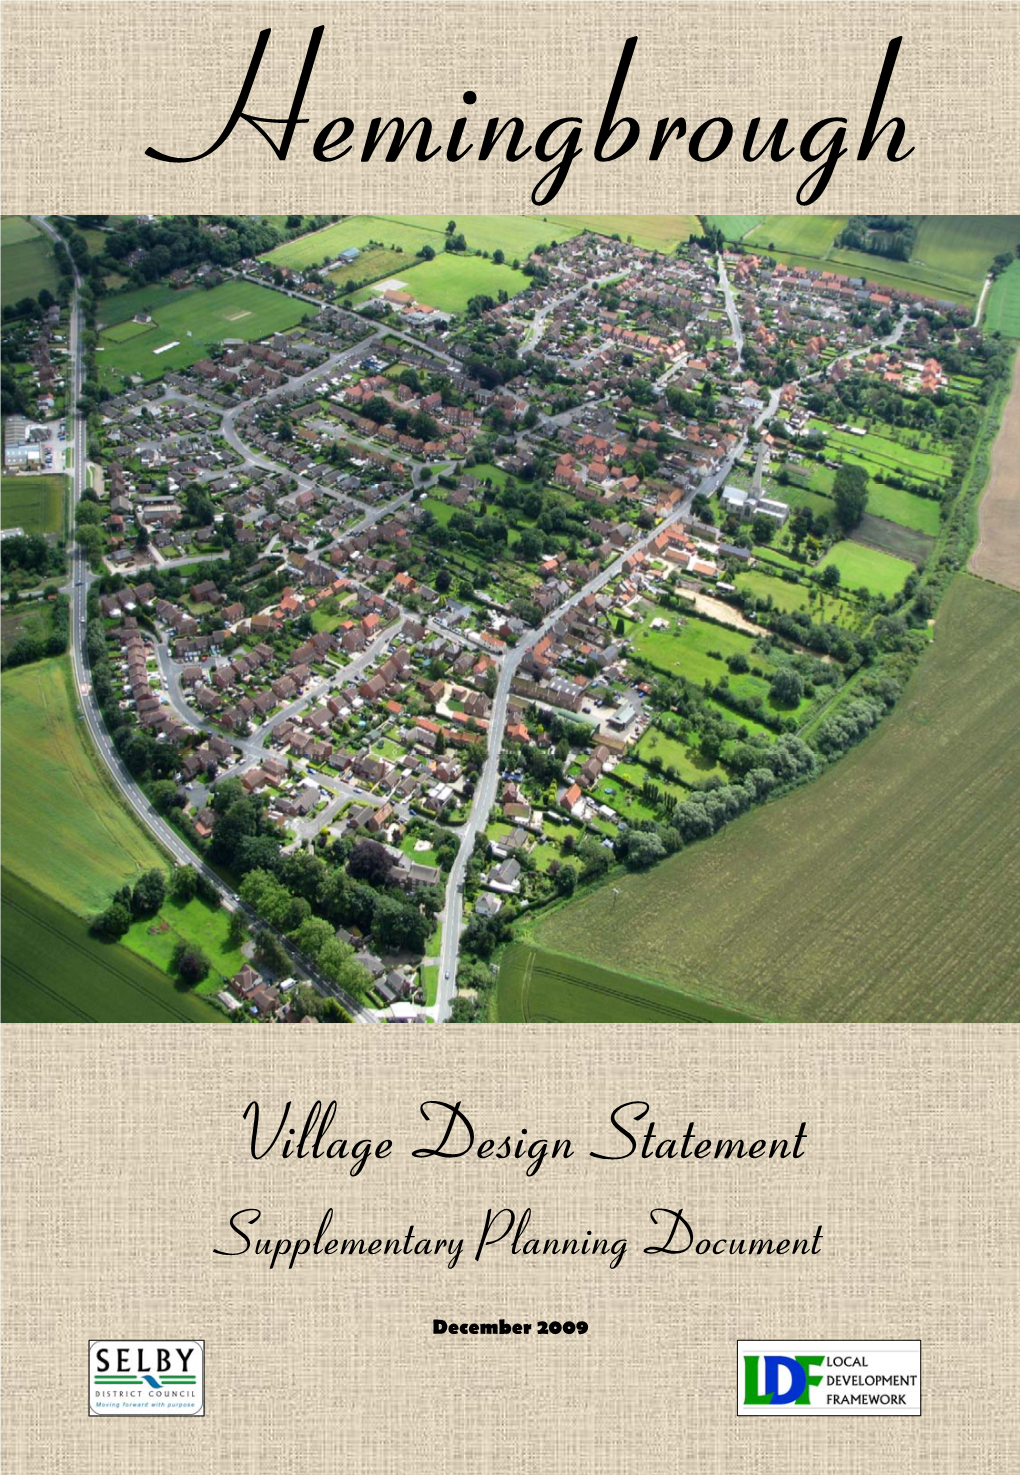 Hemingbrough Village Design Statement. Selby District Council